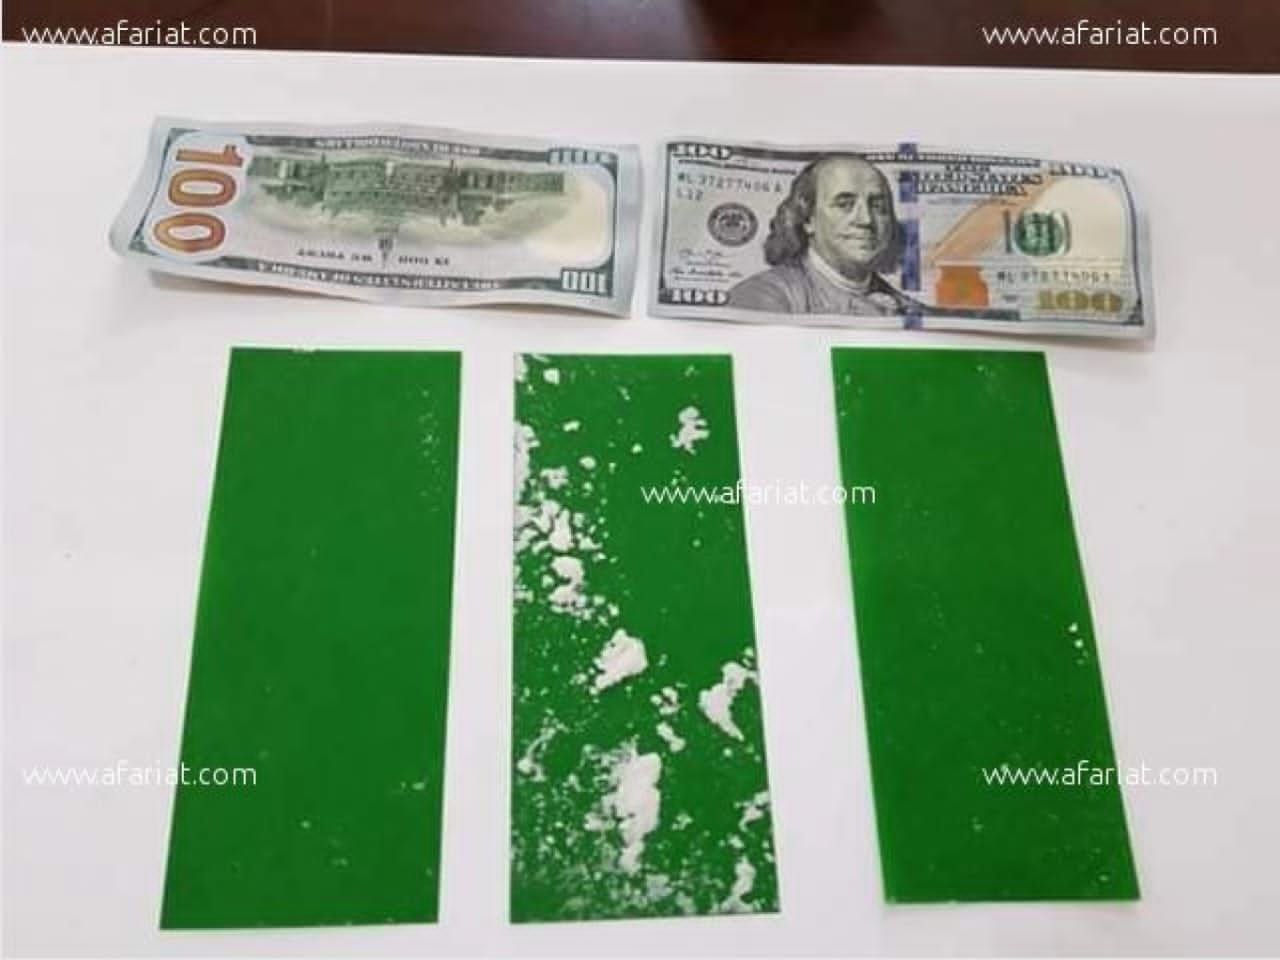 Billets de banque verts